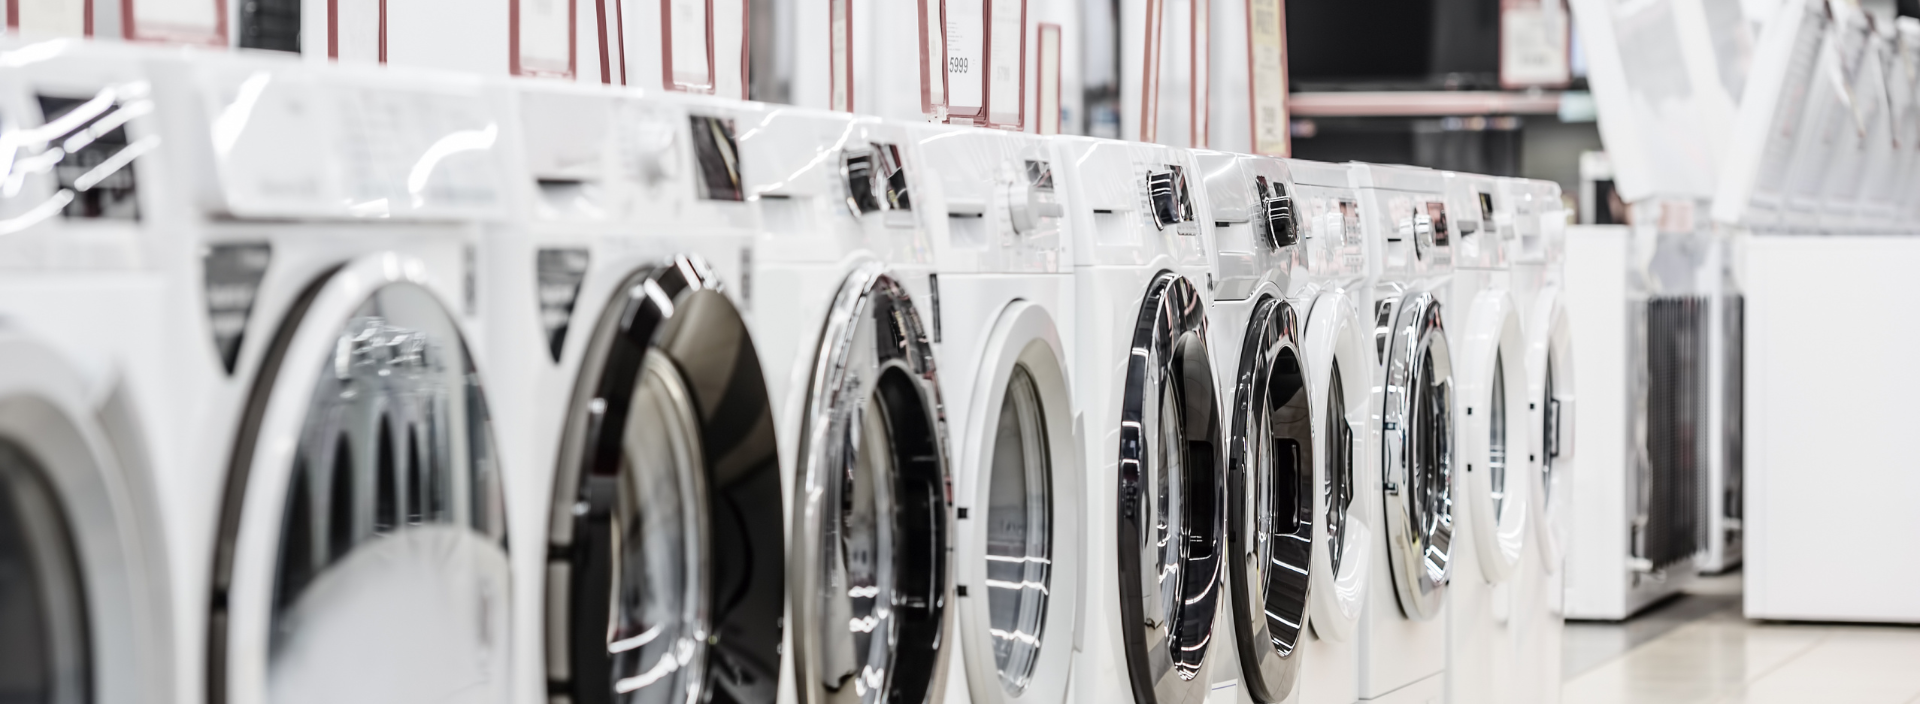 should you repair or replace your washing machine?